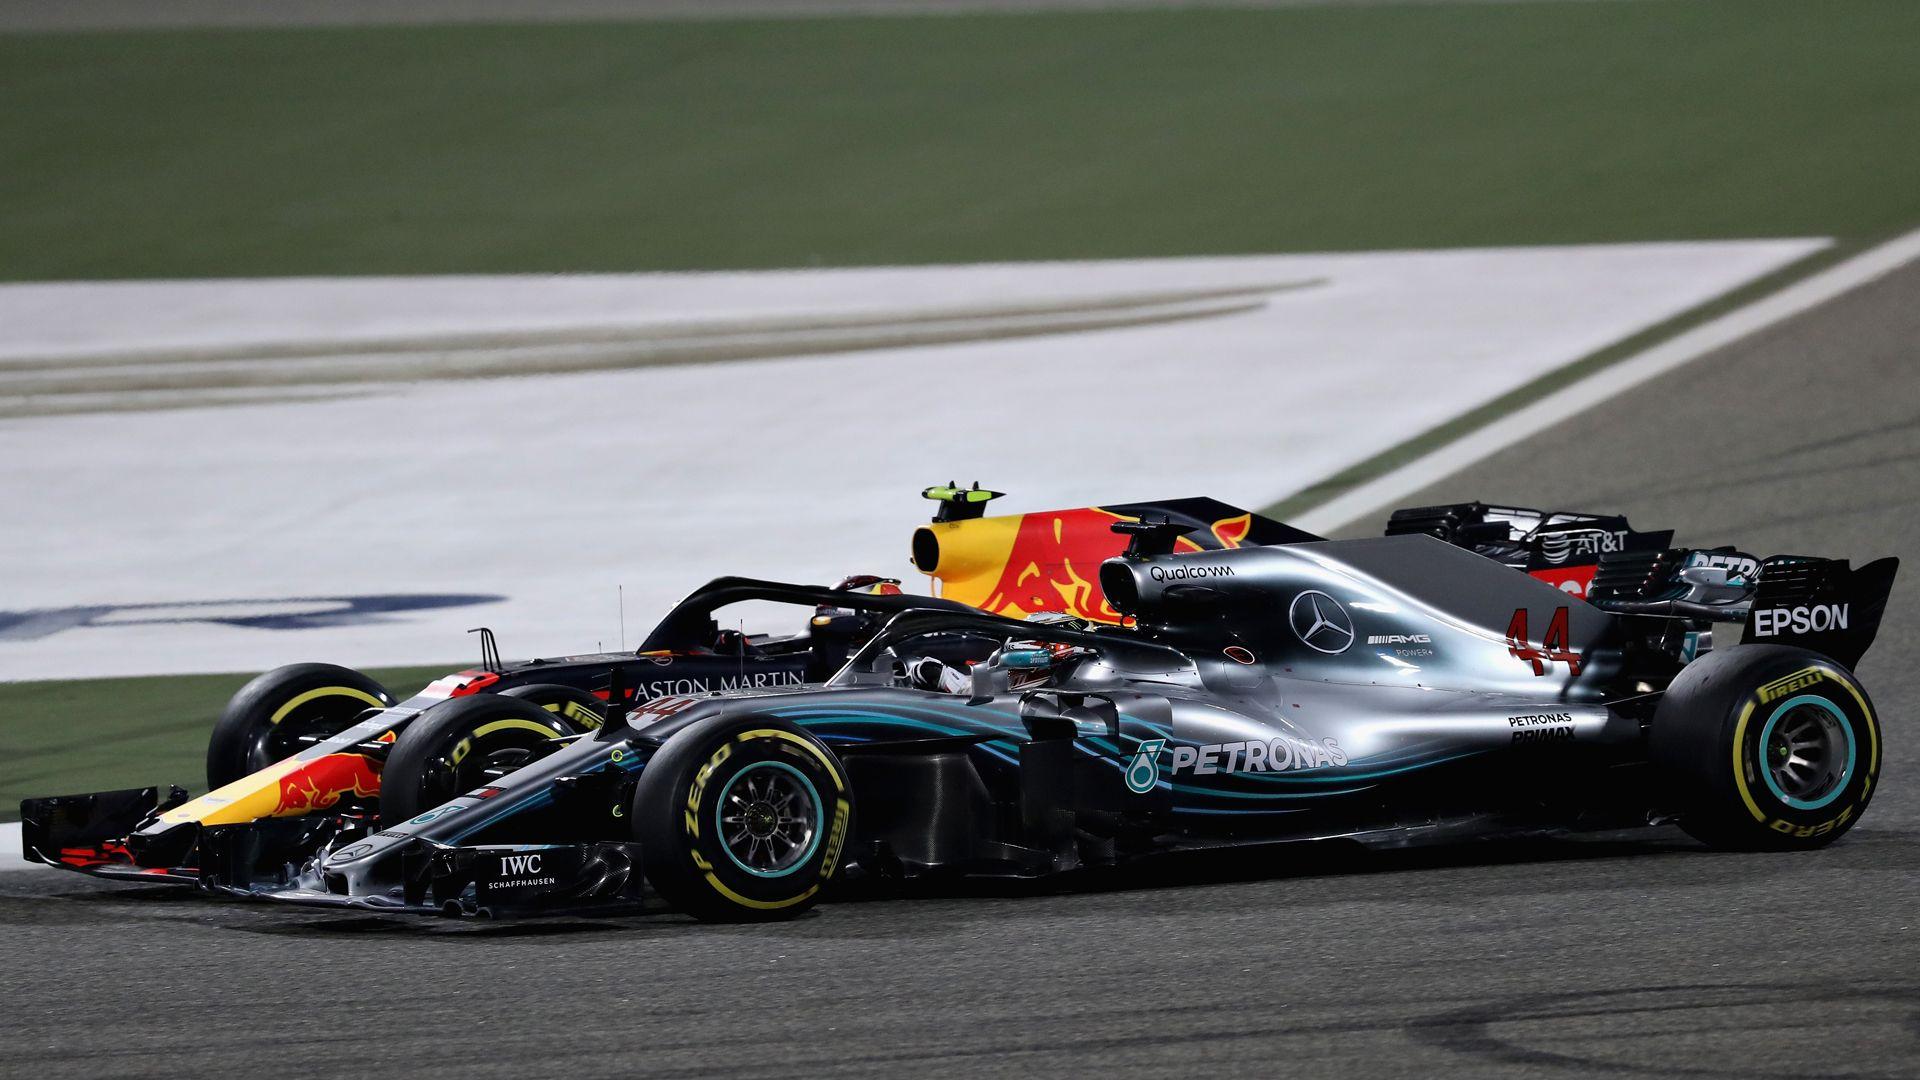 Bahrain GP: Lewis Hamilton hits back at Max Verstappen after clash